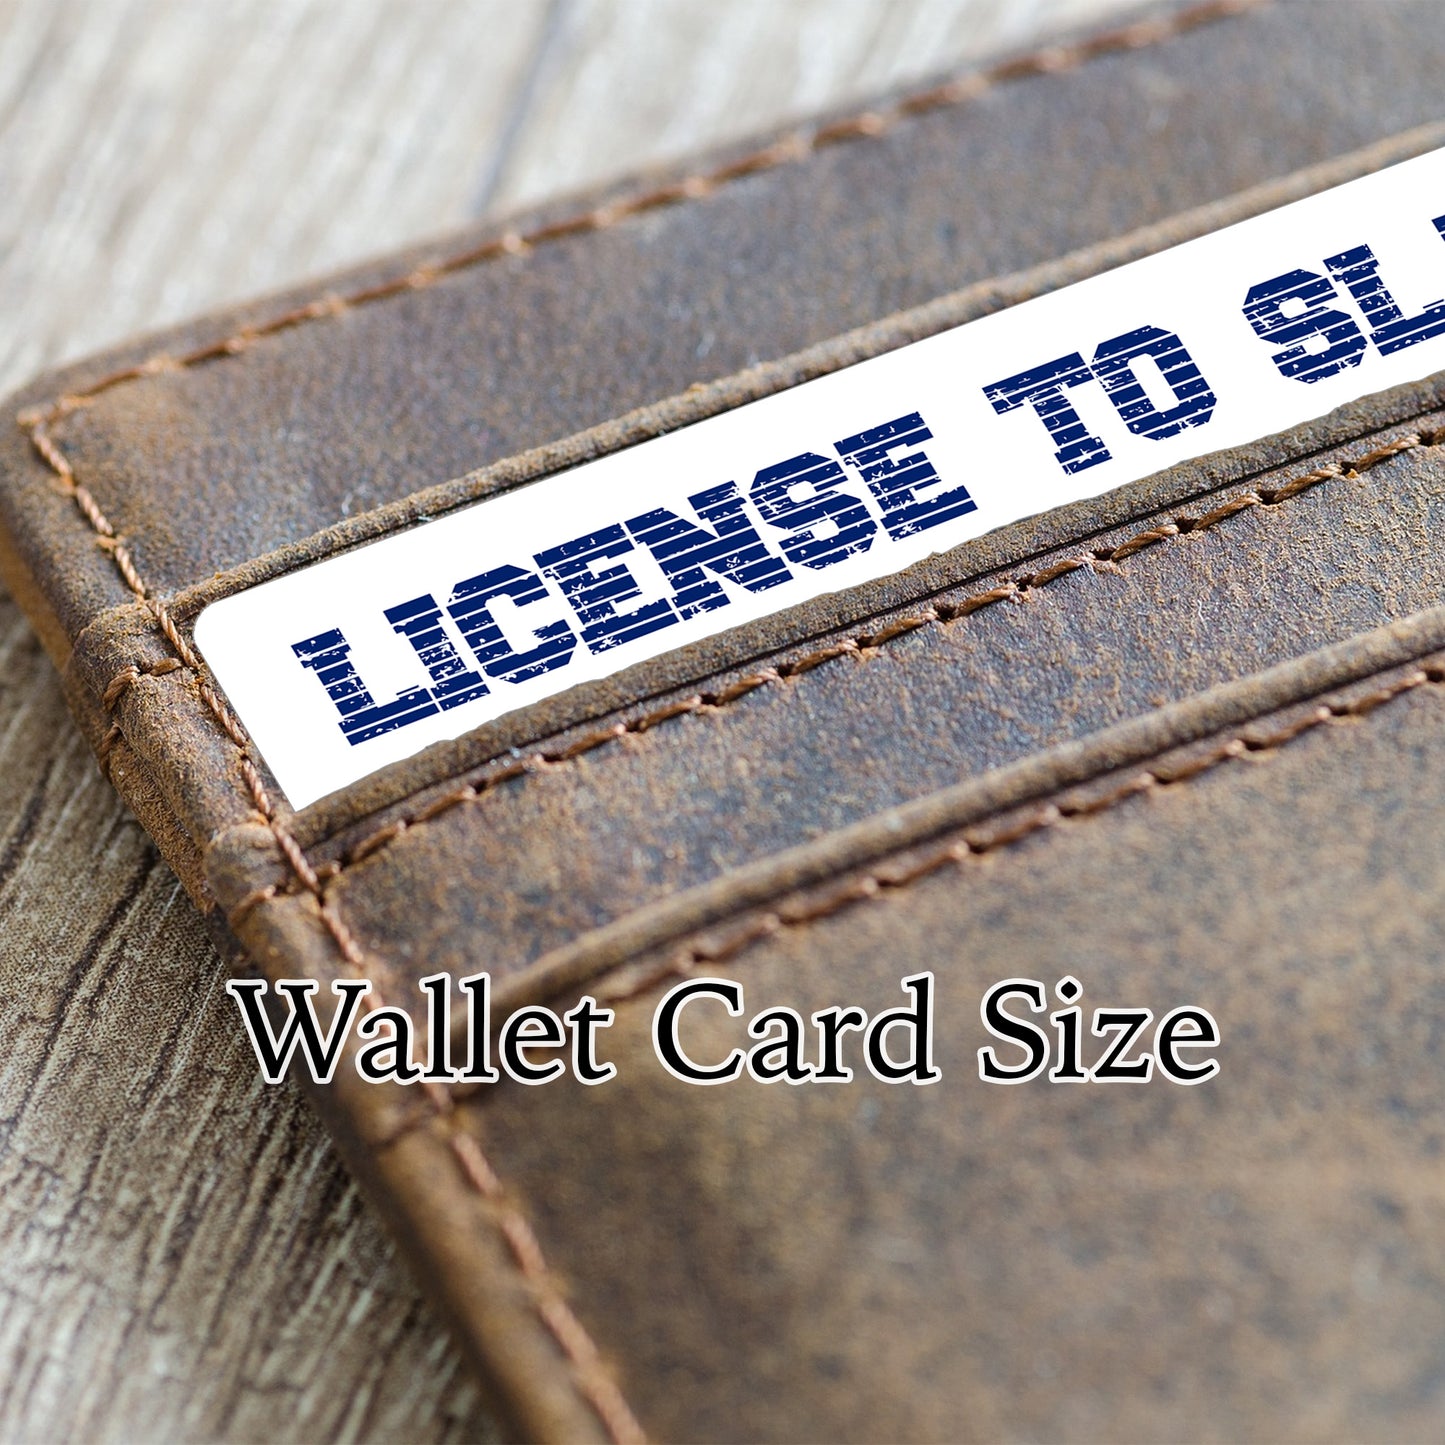 Abrogender pride personalised license to slay card